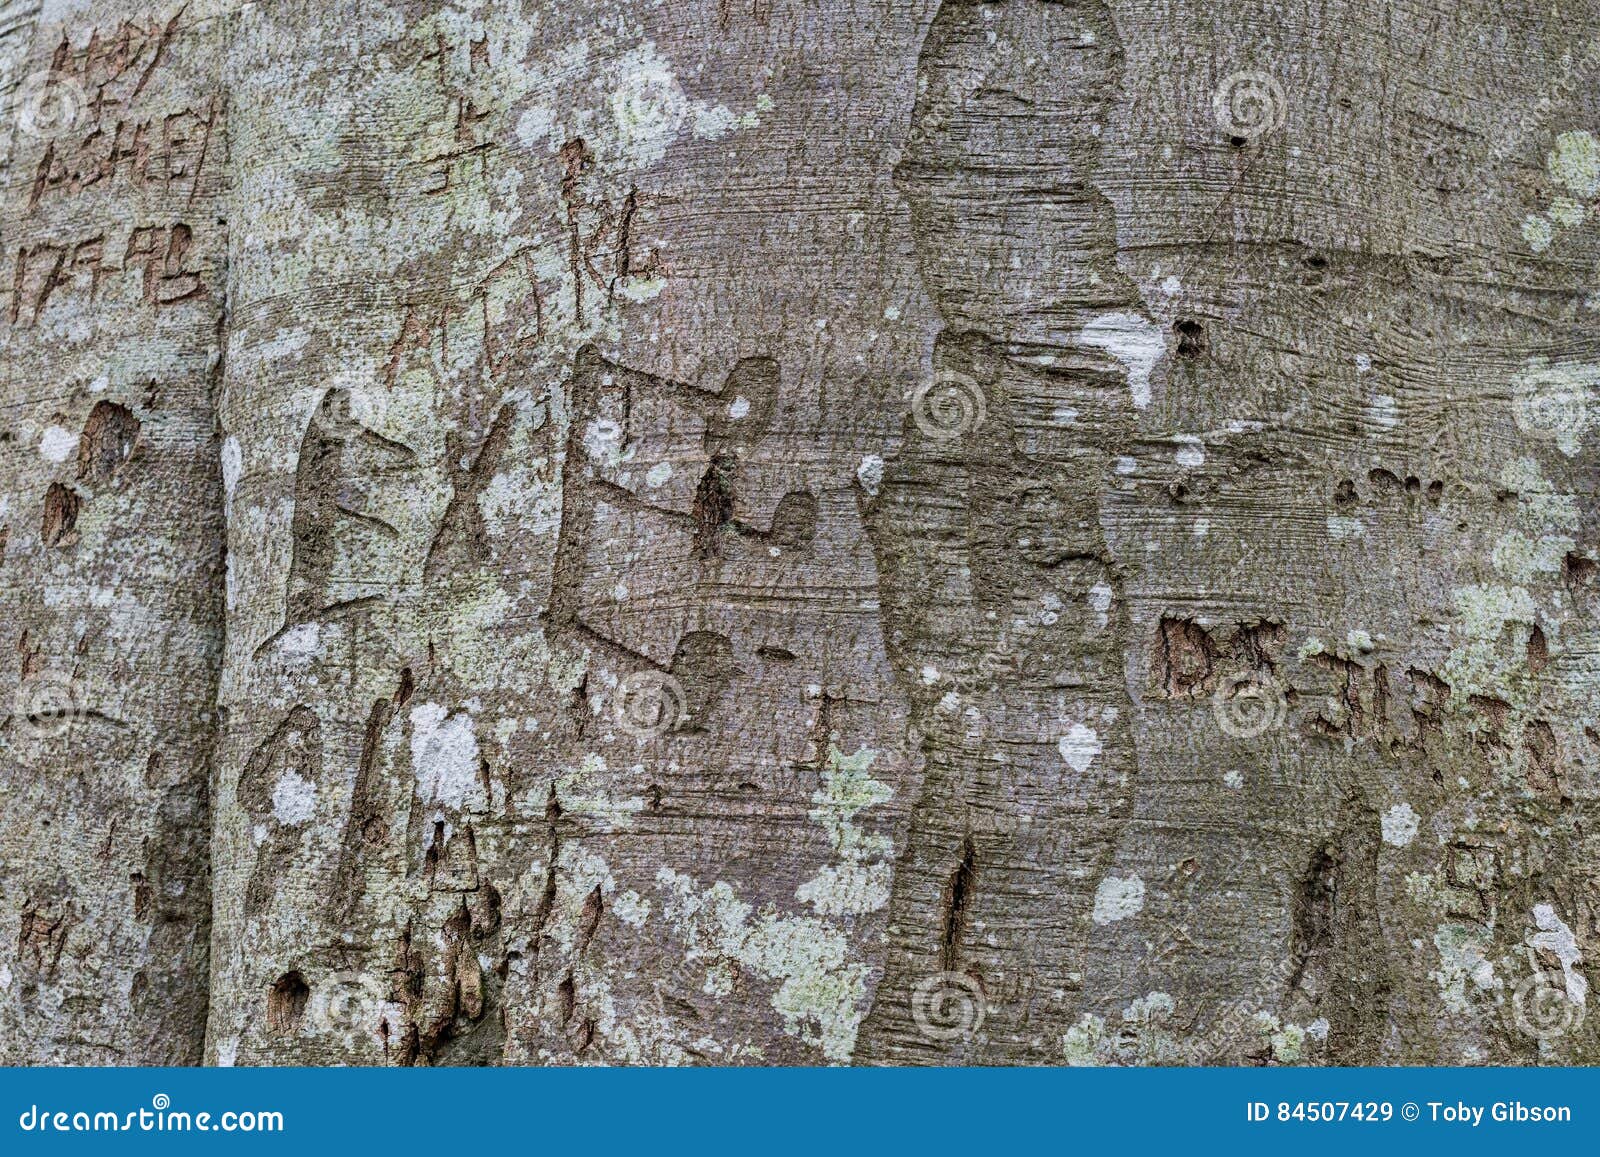 Beech tree graffiti stock image. Image of markings, scar - 84507429